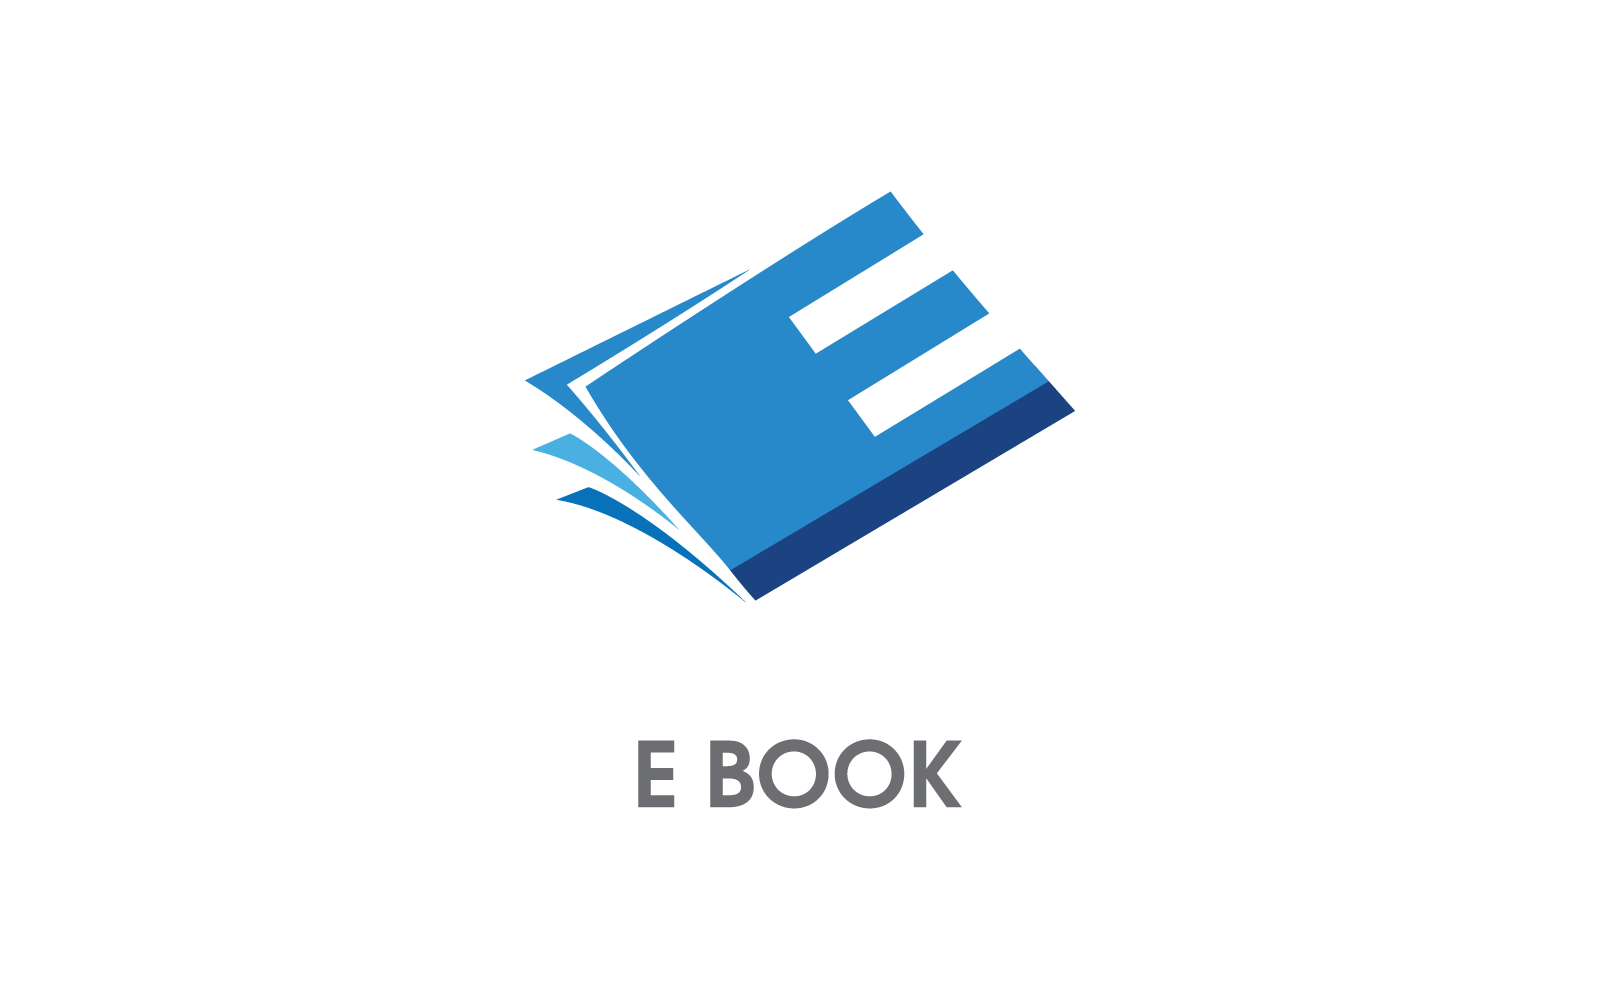 E- book modern digital book logo flat design vector